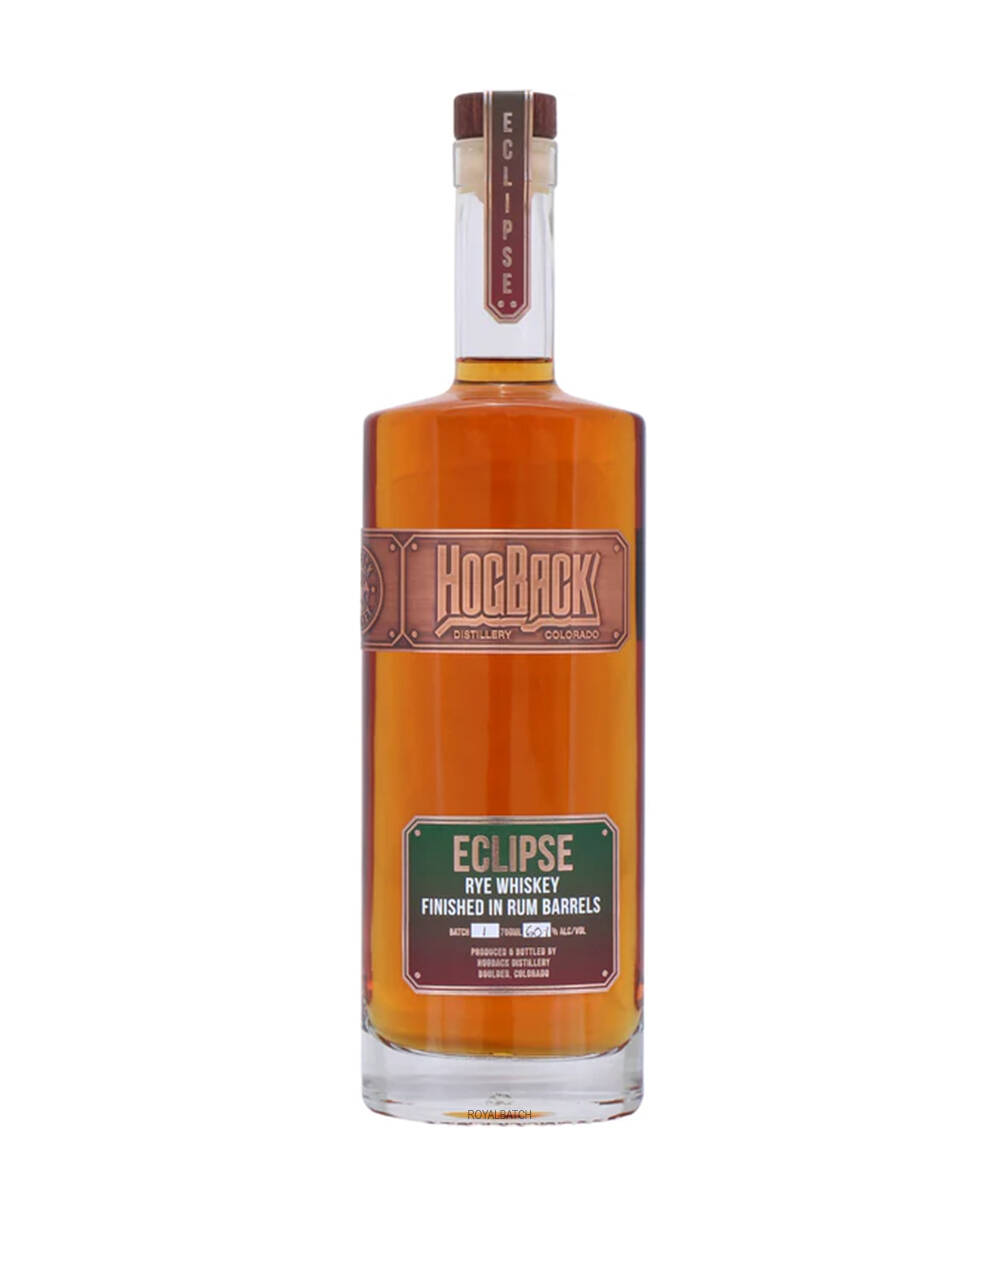 Hogback Distillery Eclipse Finished in Rum Barrels Rye Whiskey